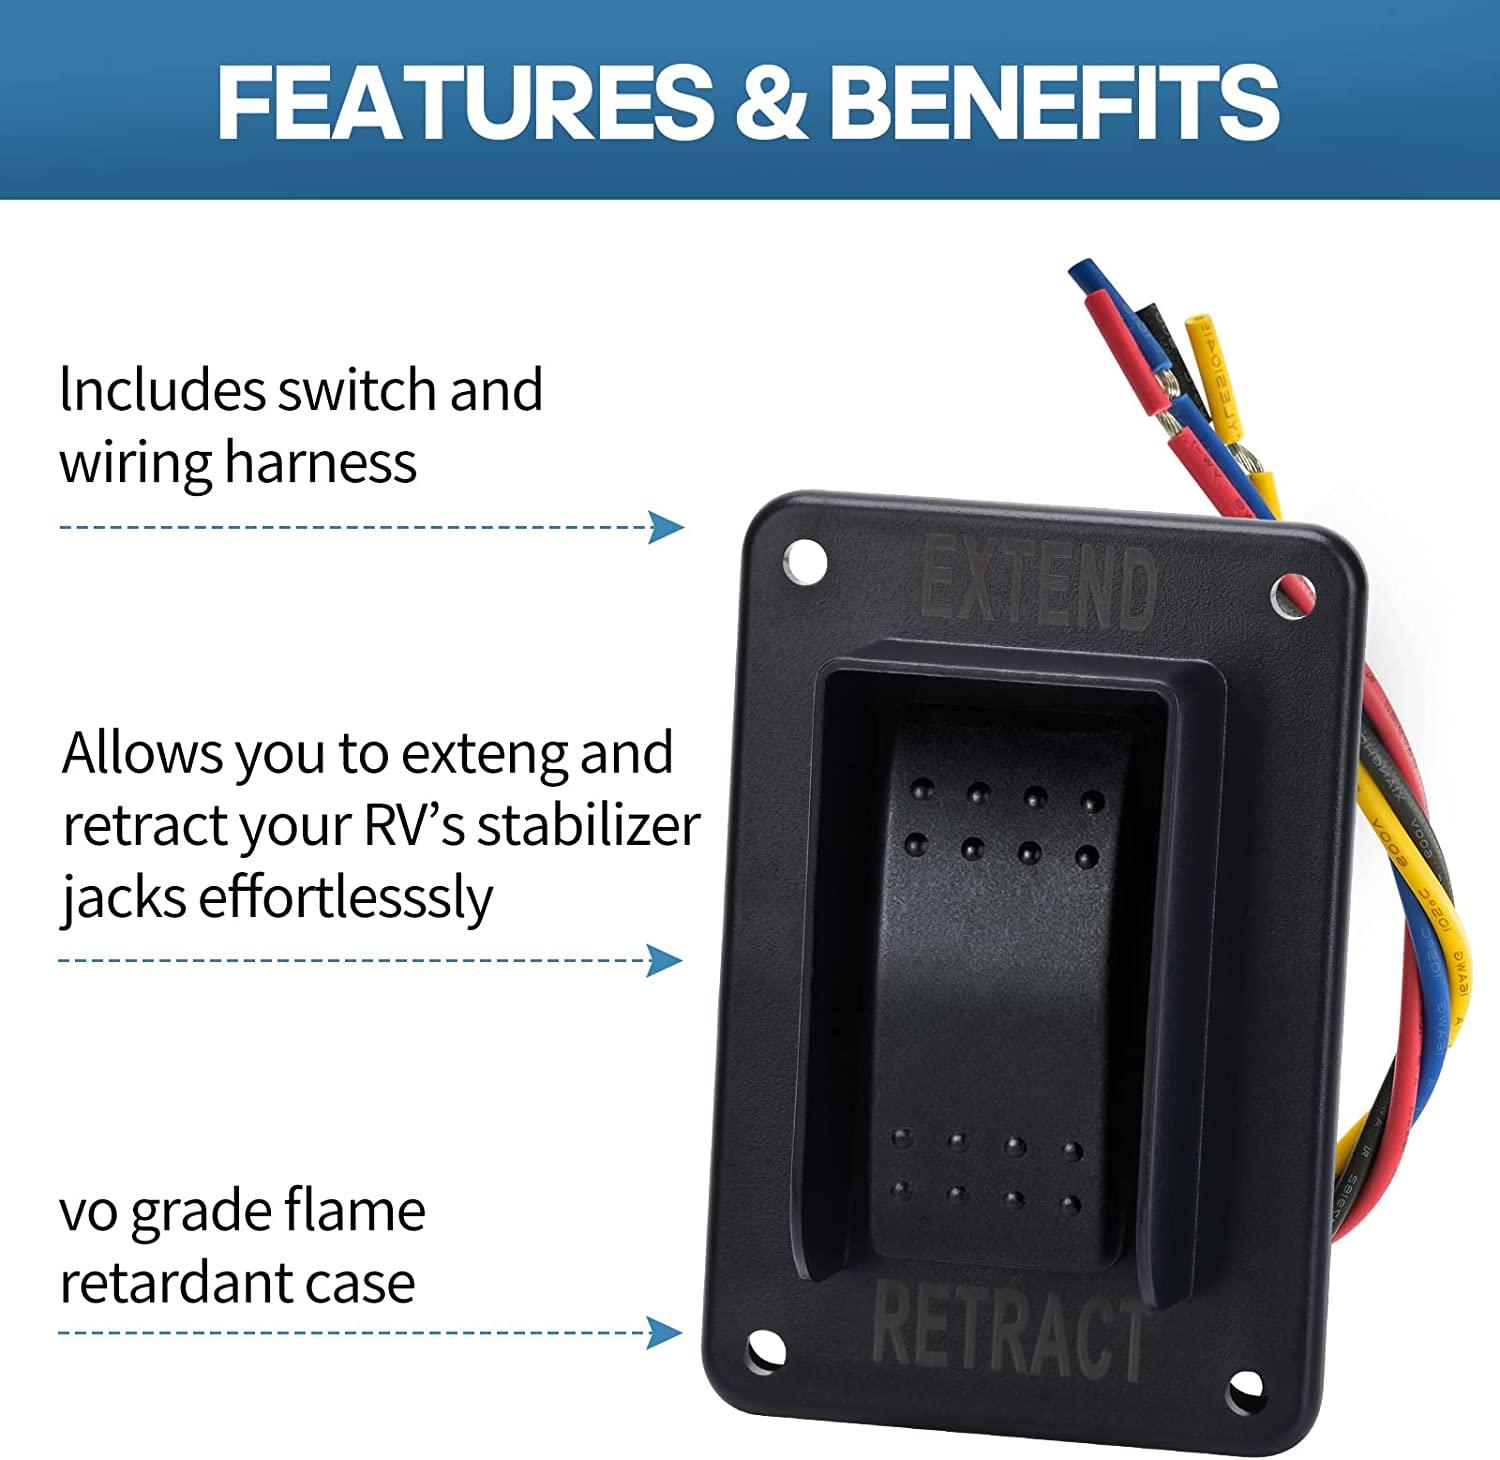 Power Stabilizer Switch, Briidea RV Jack Switch Electric Jack Switch with Harness 12V Extend Retract for Stabilizer Jacks, Black